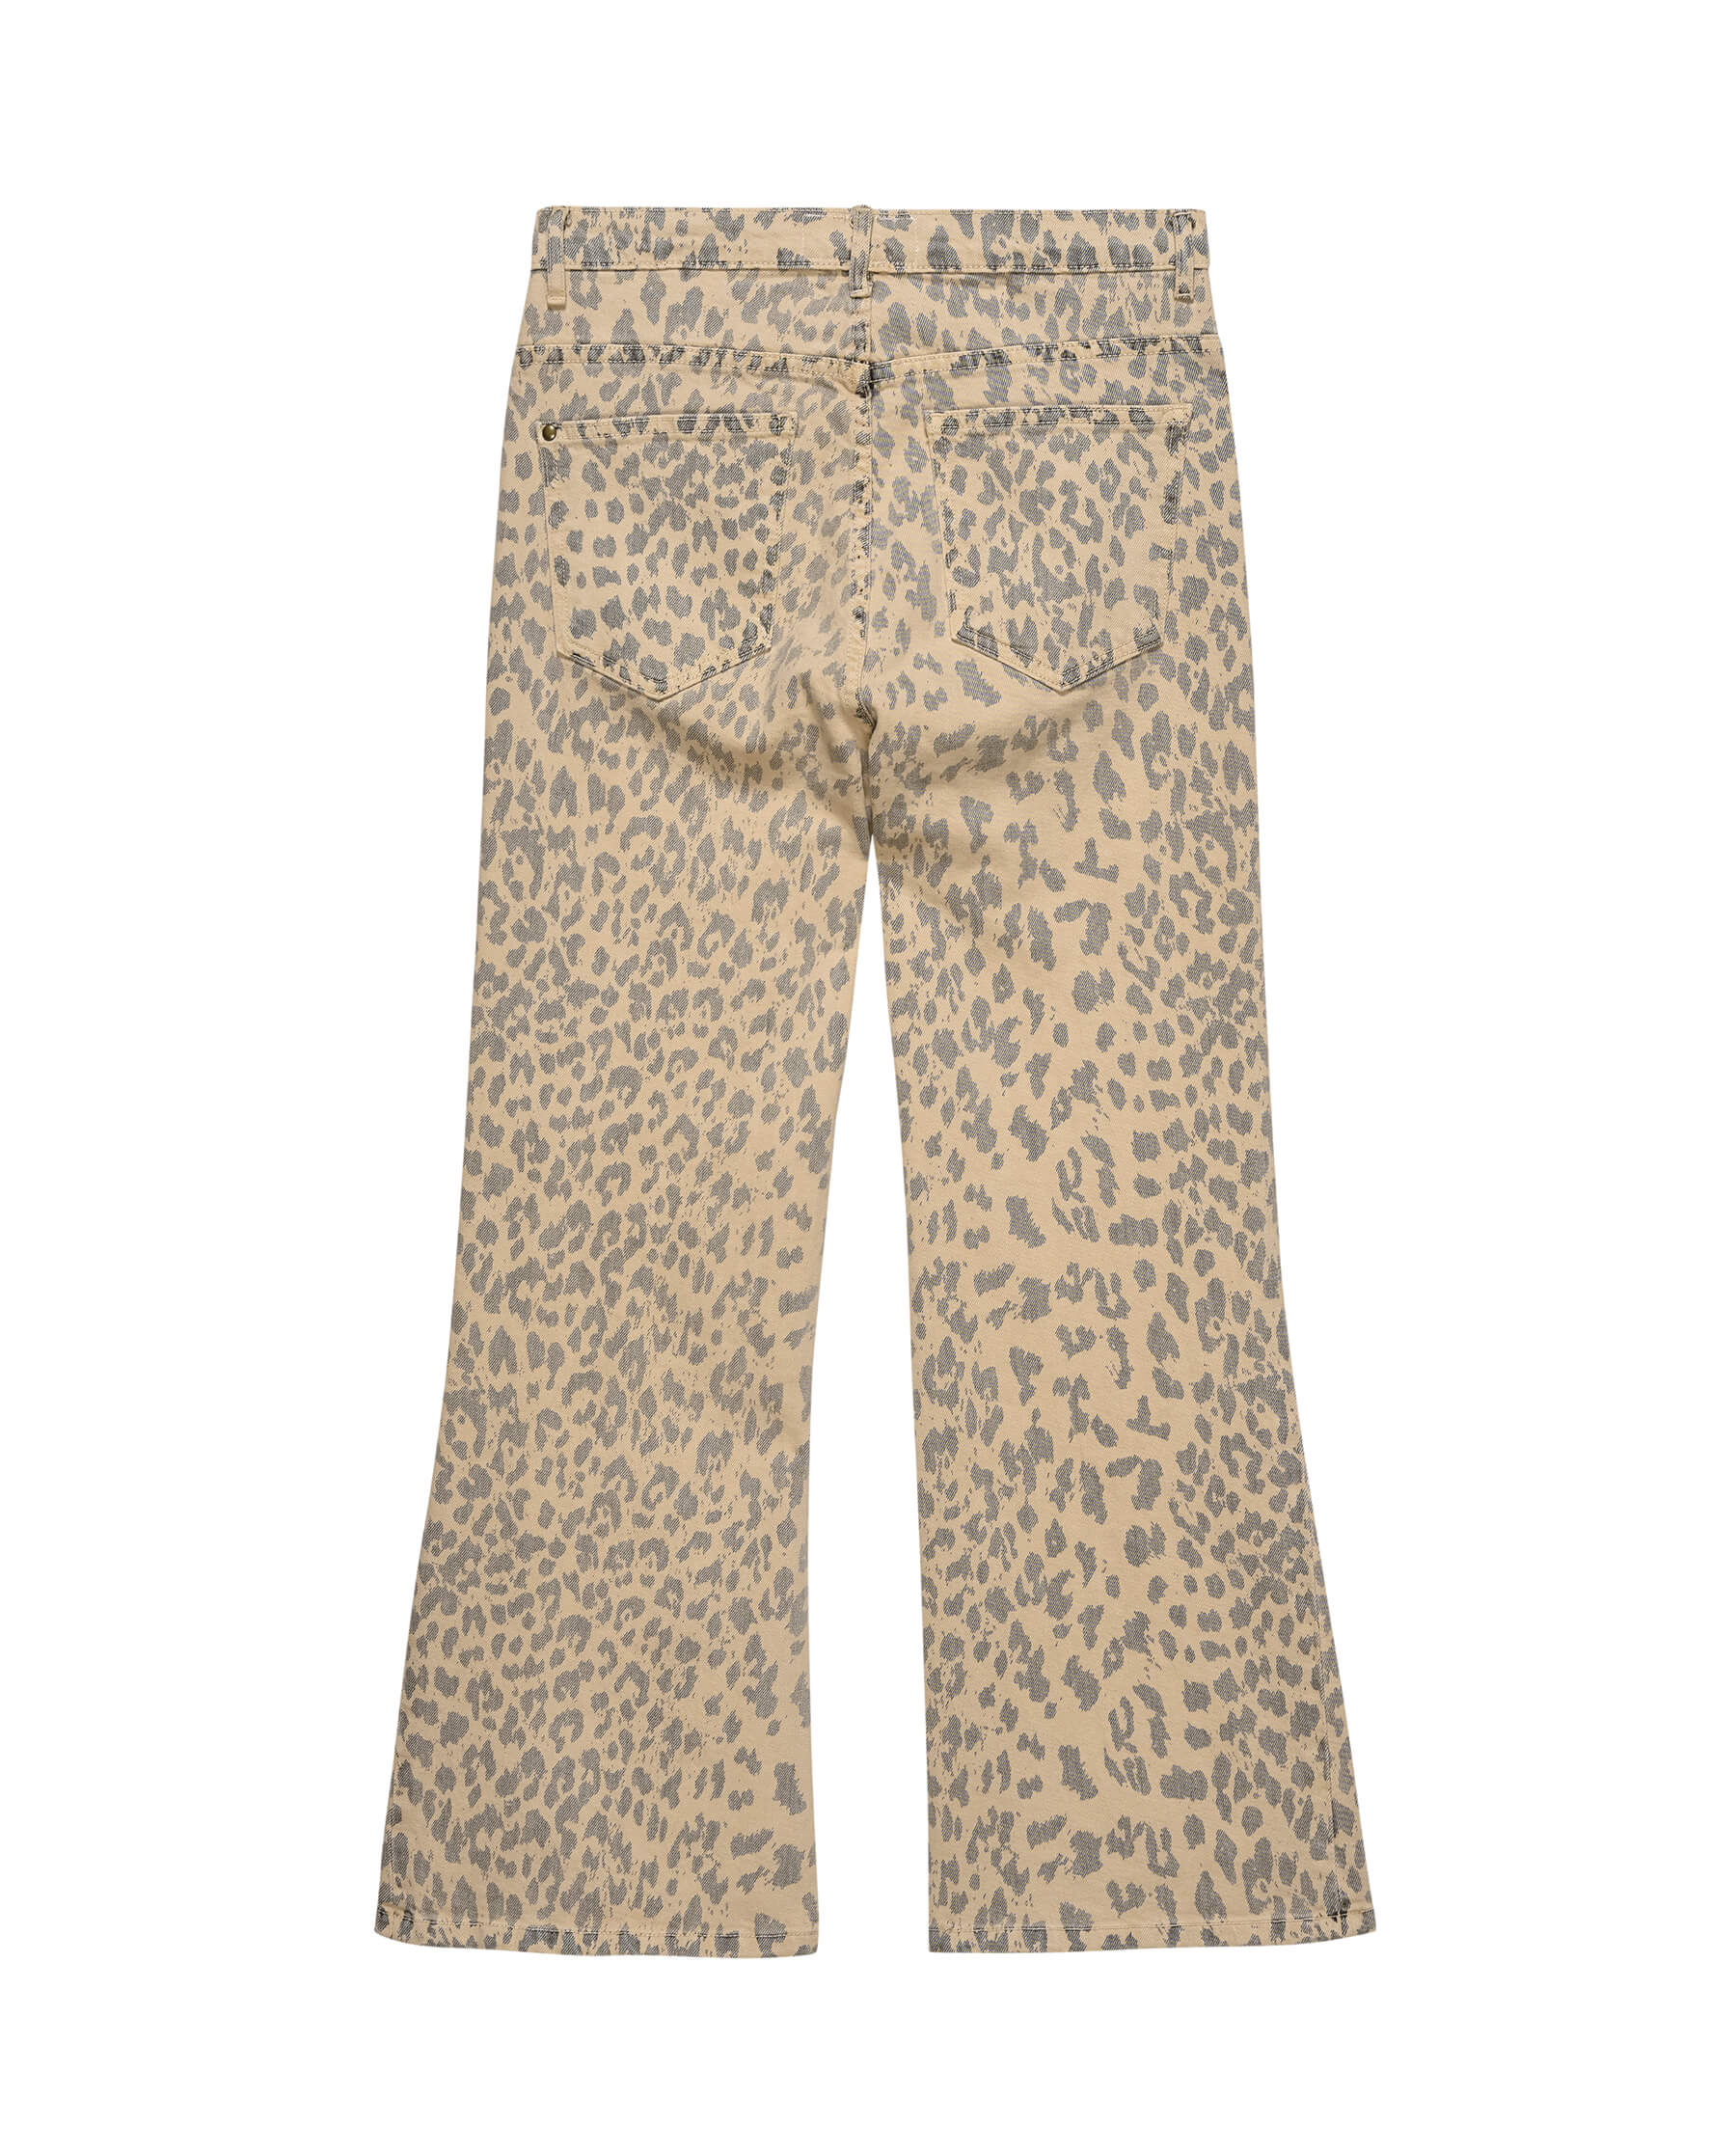 The Kick Bell Jean. -- Vintage Leopard